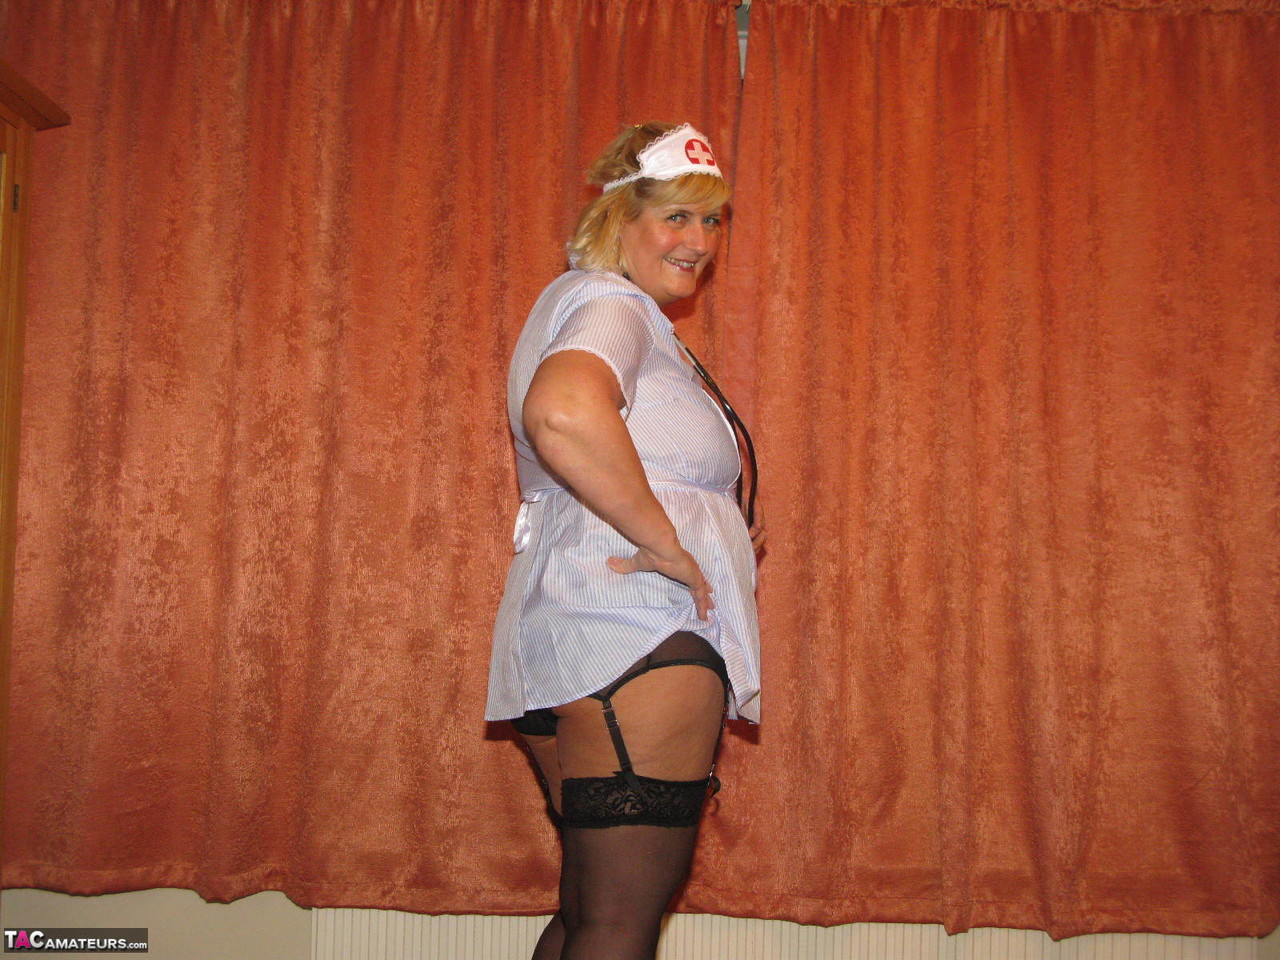 Fat nurse Chrissy Uk removes a surgical mask and uniform to model lingerie photo porno #424682140 | TAC Amateurs Pics, Chrissy Uk, Mature, porno mobile